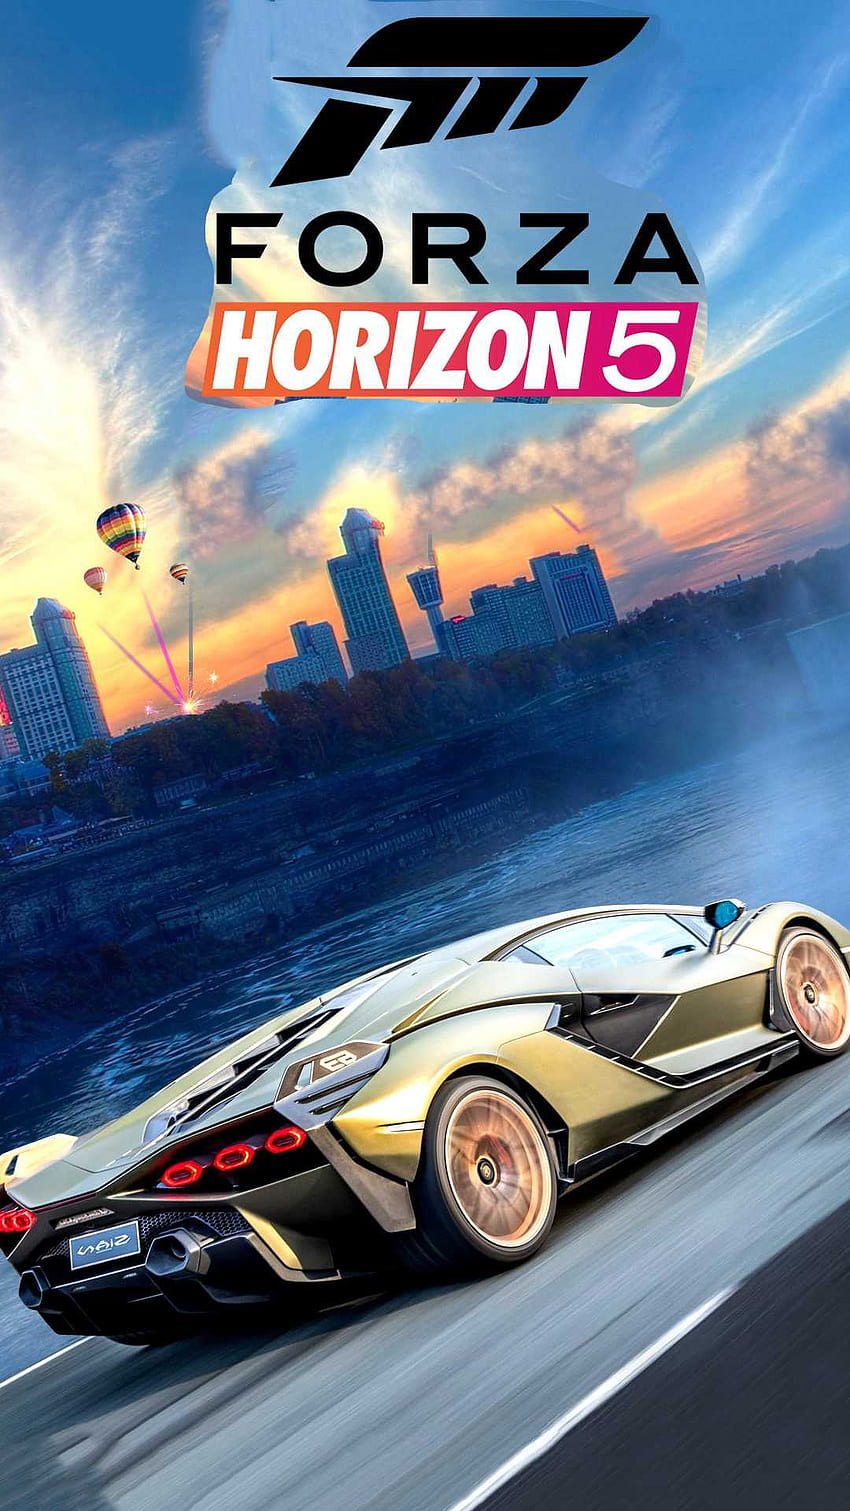 Wallpaper  Forza Horizon 5 Xbox Game Studios 1440x2560  CHEN232   2252690  HD Wallpapers  WallHere